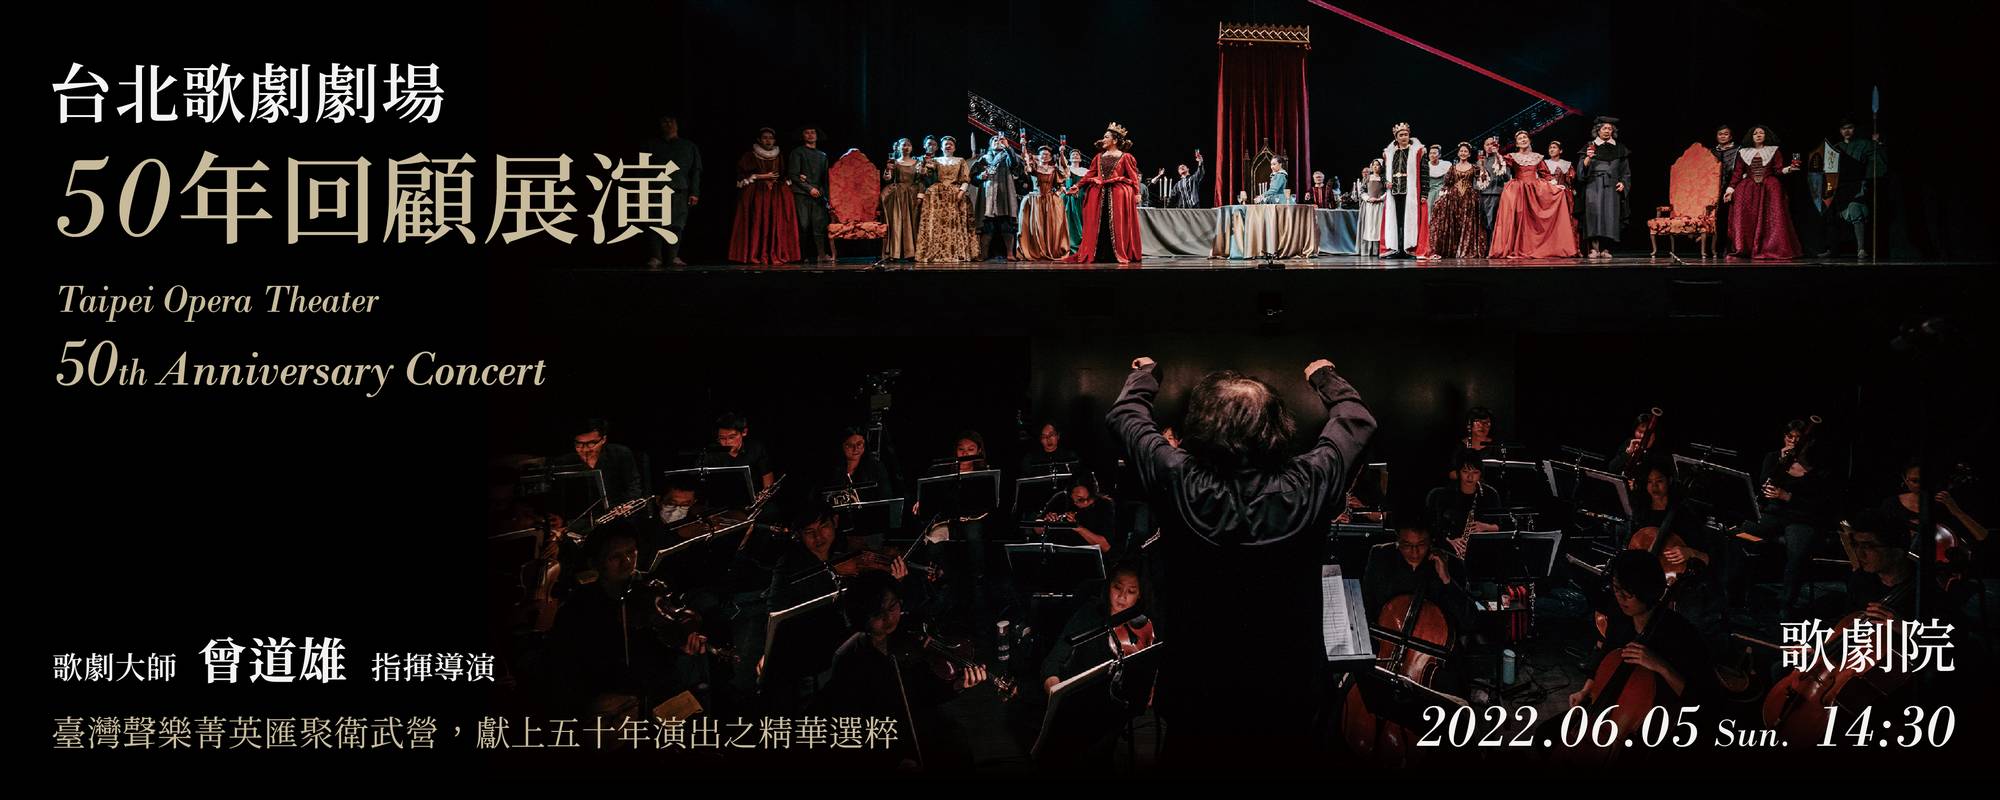  Taipei Opera Theater 50 Anniversary Concert